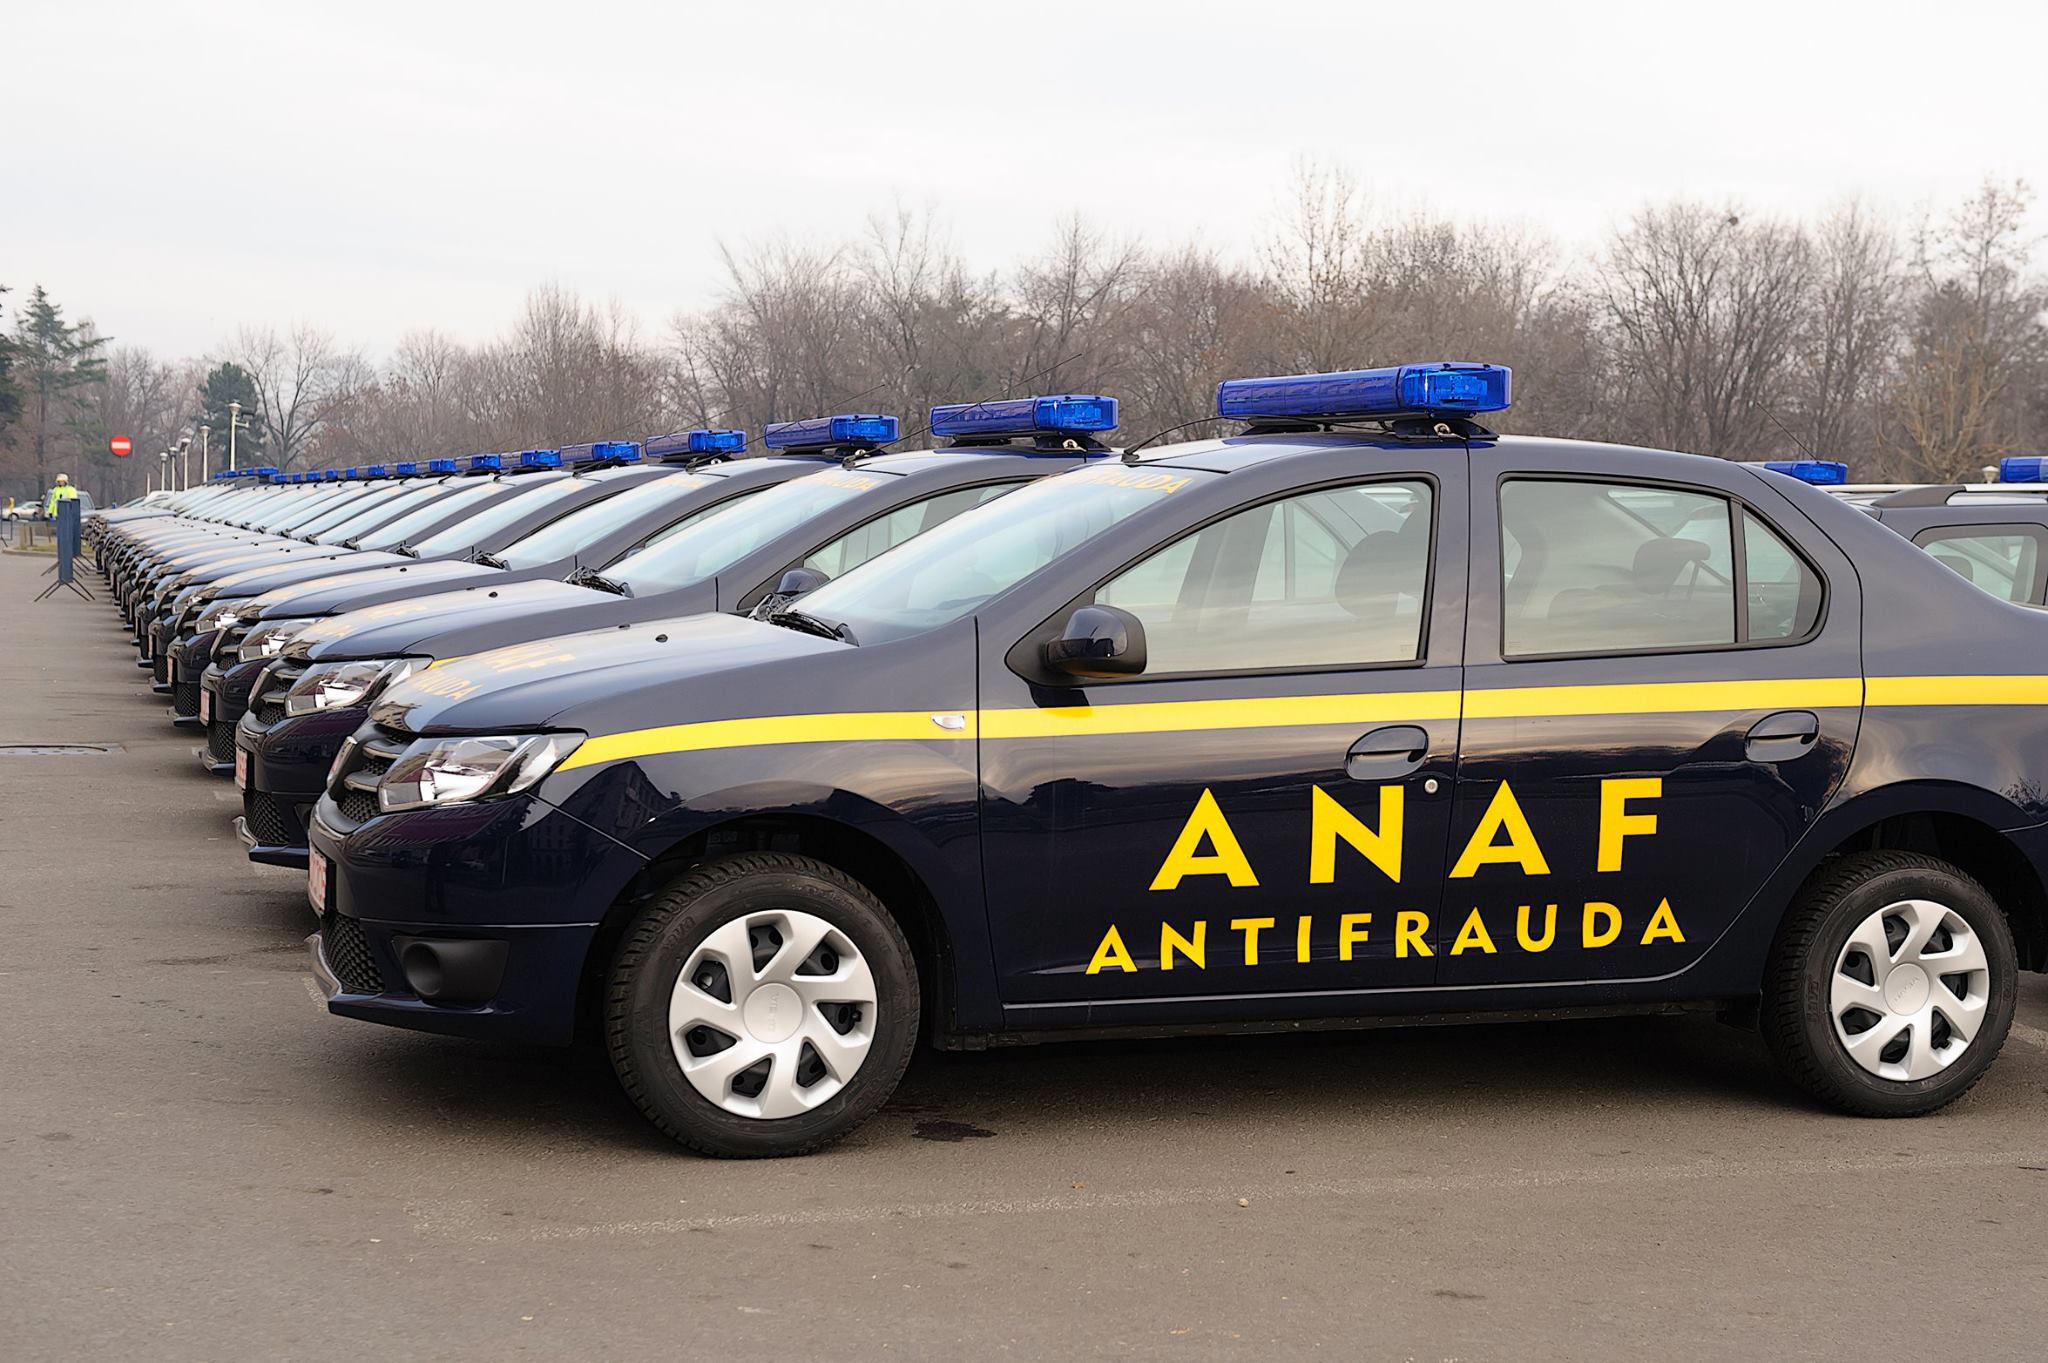 10,26 tone tutun confiscate de inspectorii ANAF-Antifrauda